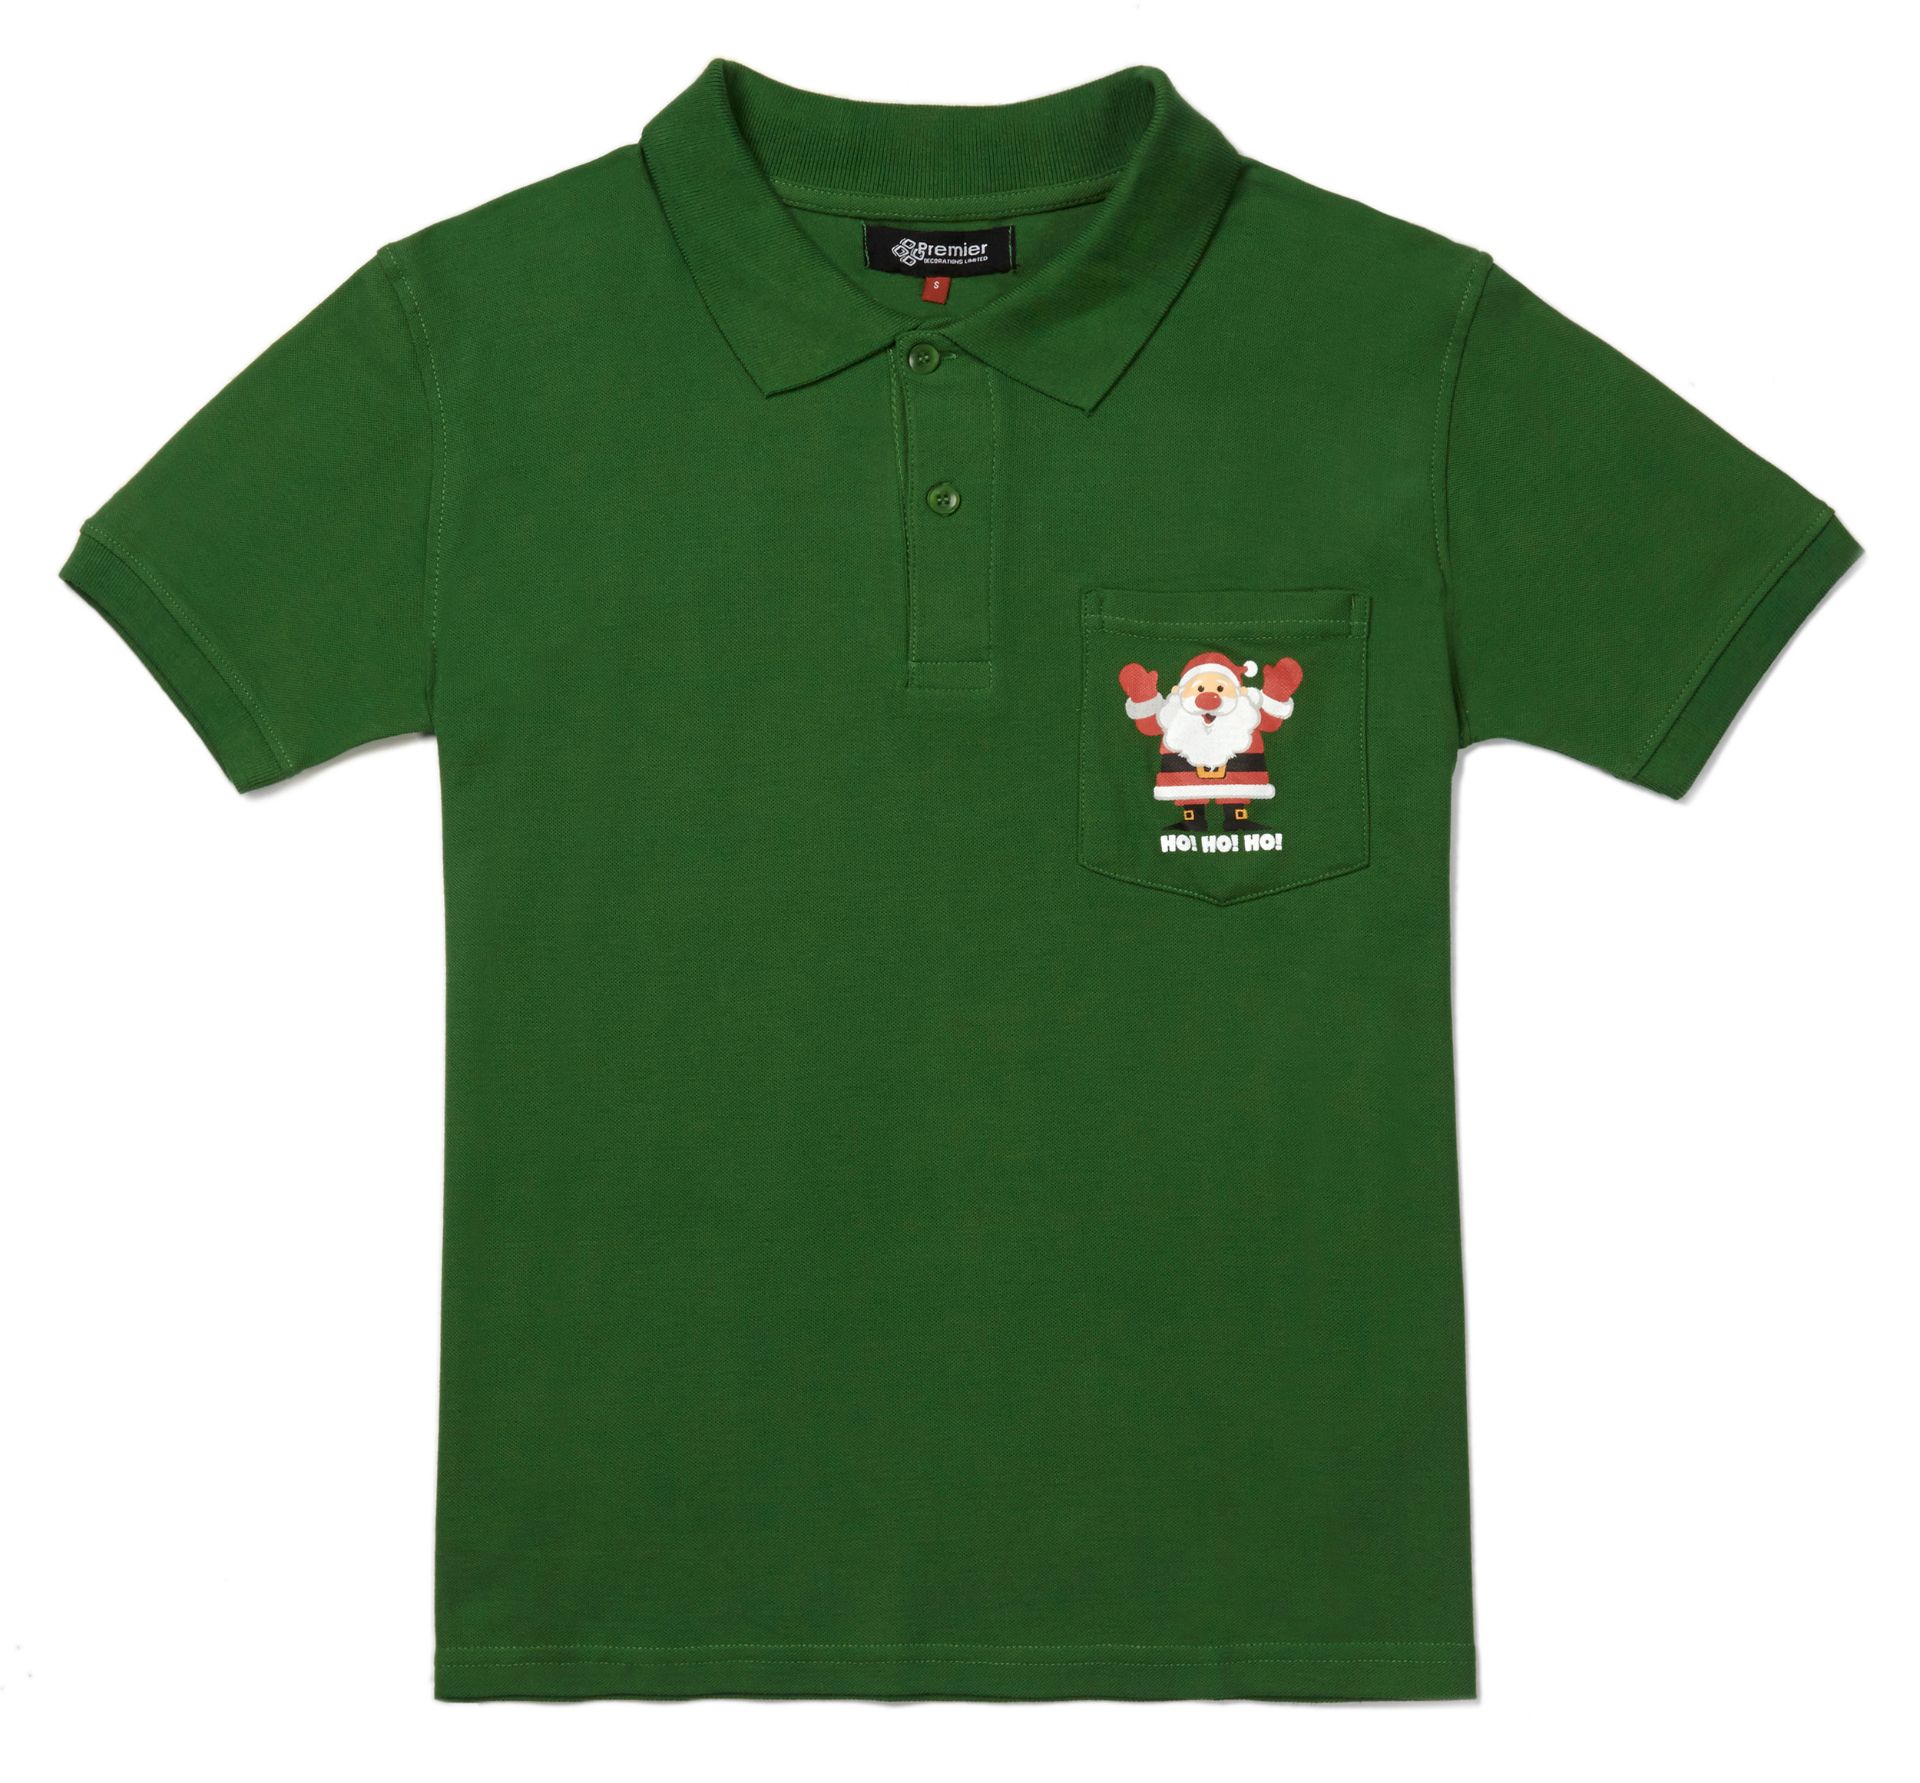 48 x Green Polo shirts - Christmas Design - 8 x small, 16 x medium, 16 x large, 8 x Extra Large.